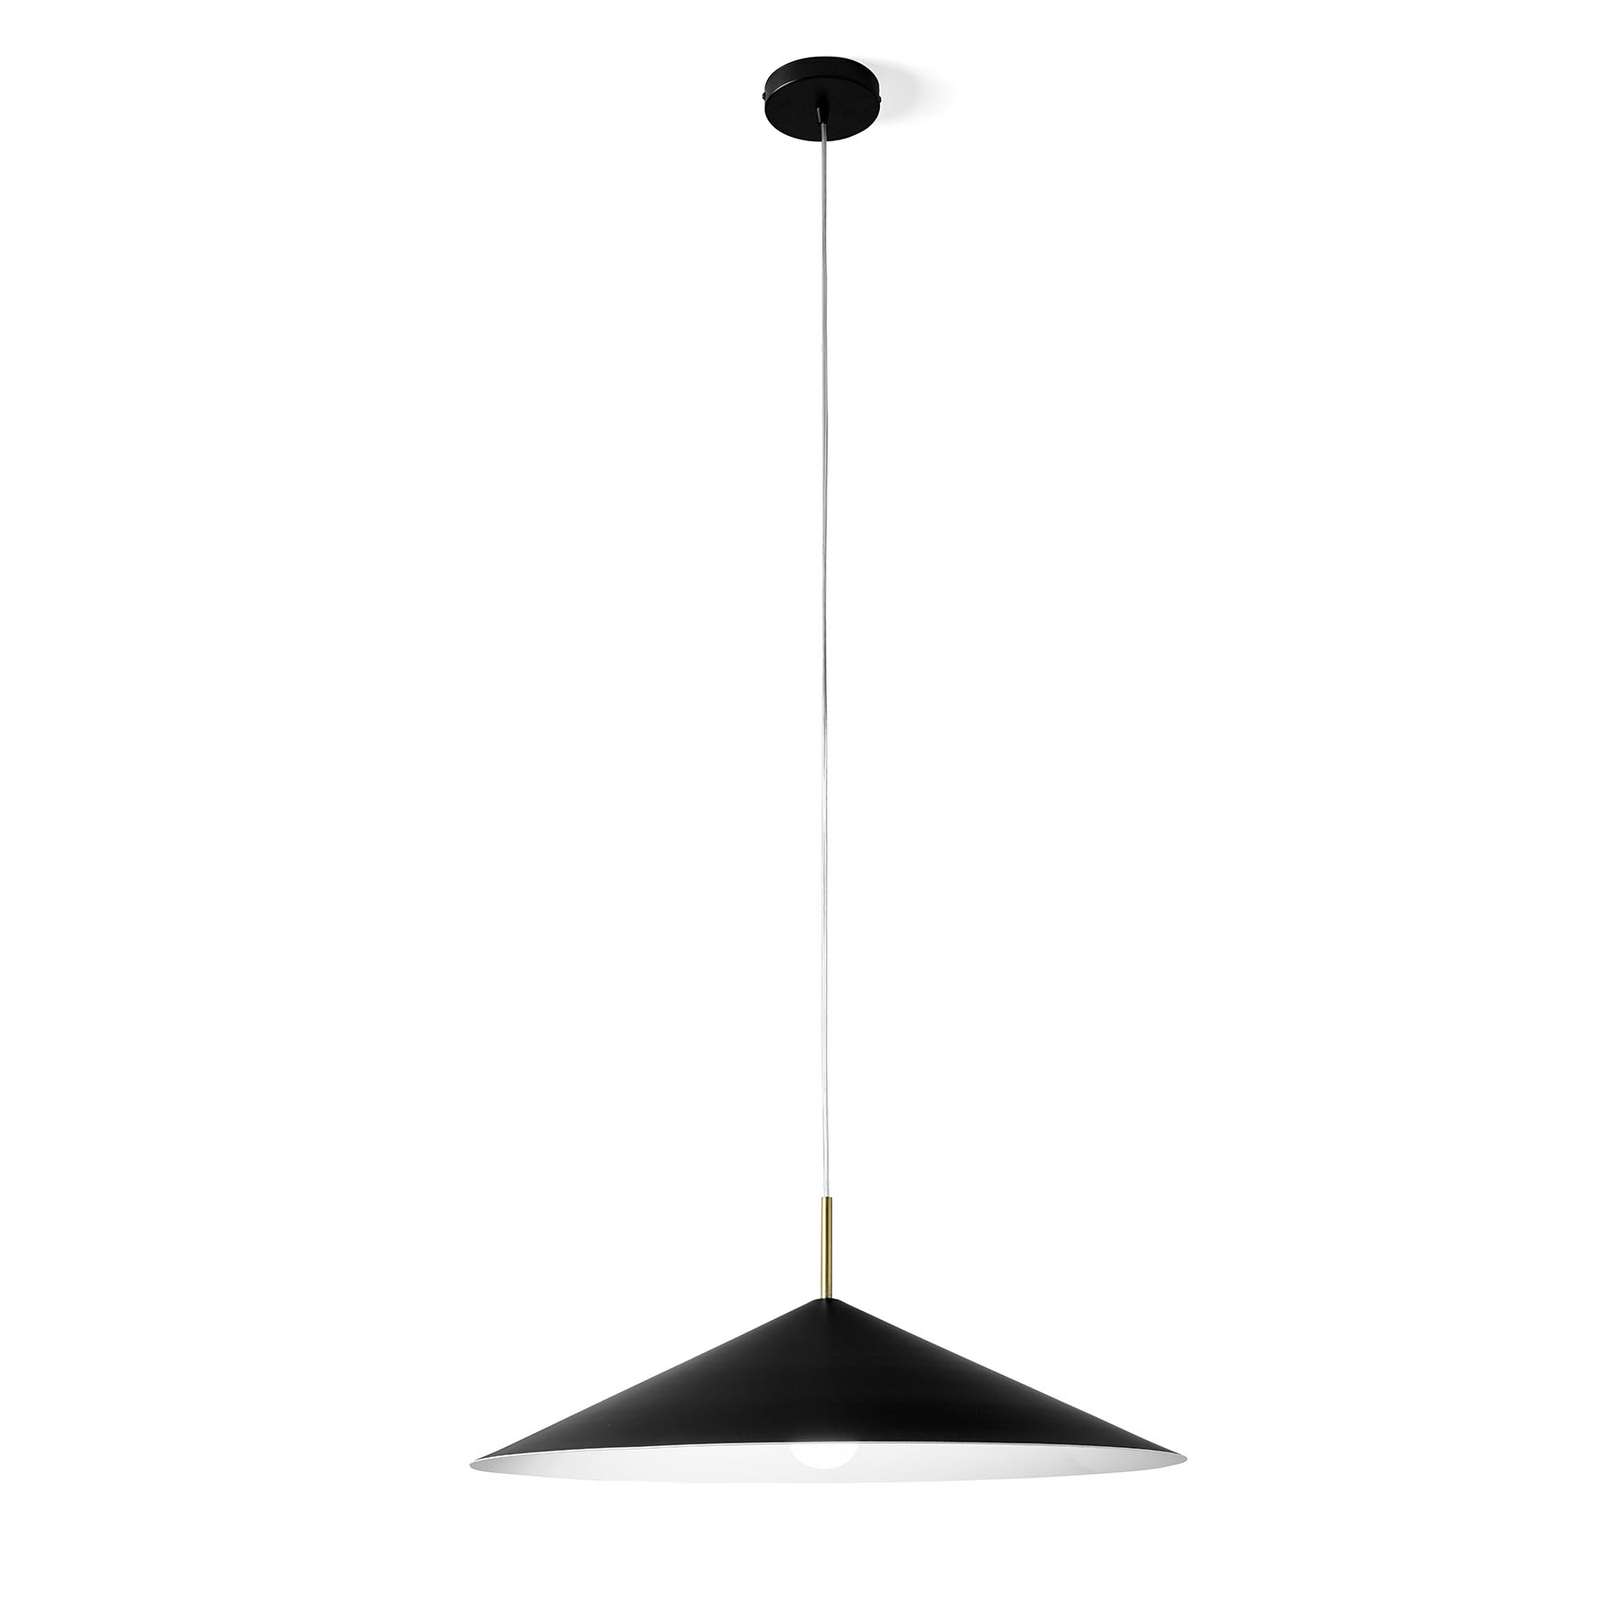 Samoi hanging light made of metal, Ø 60 cm